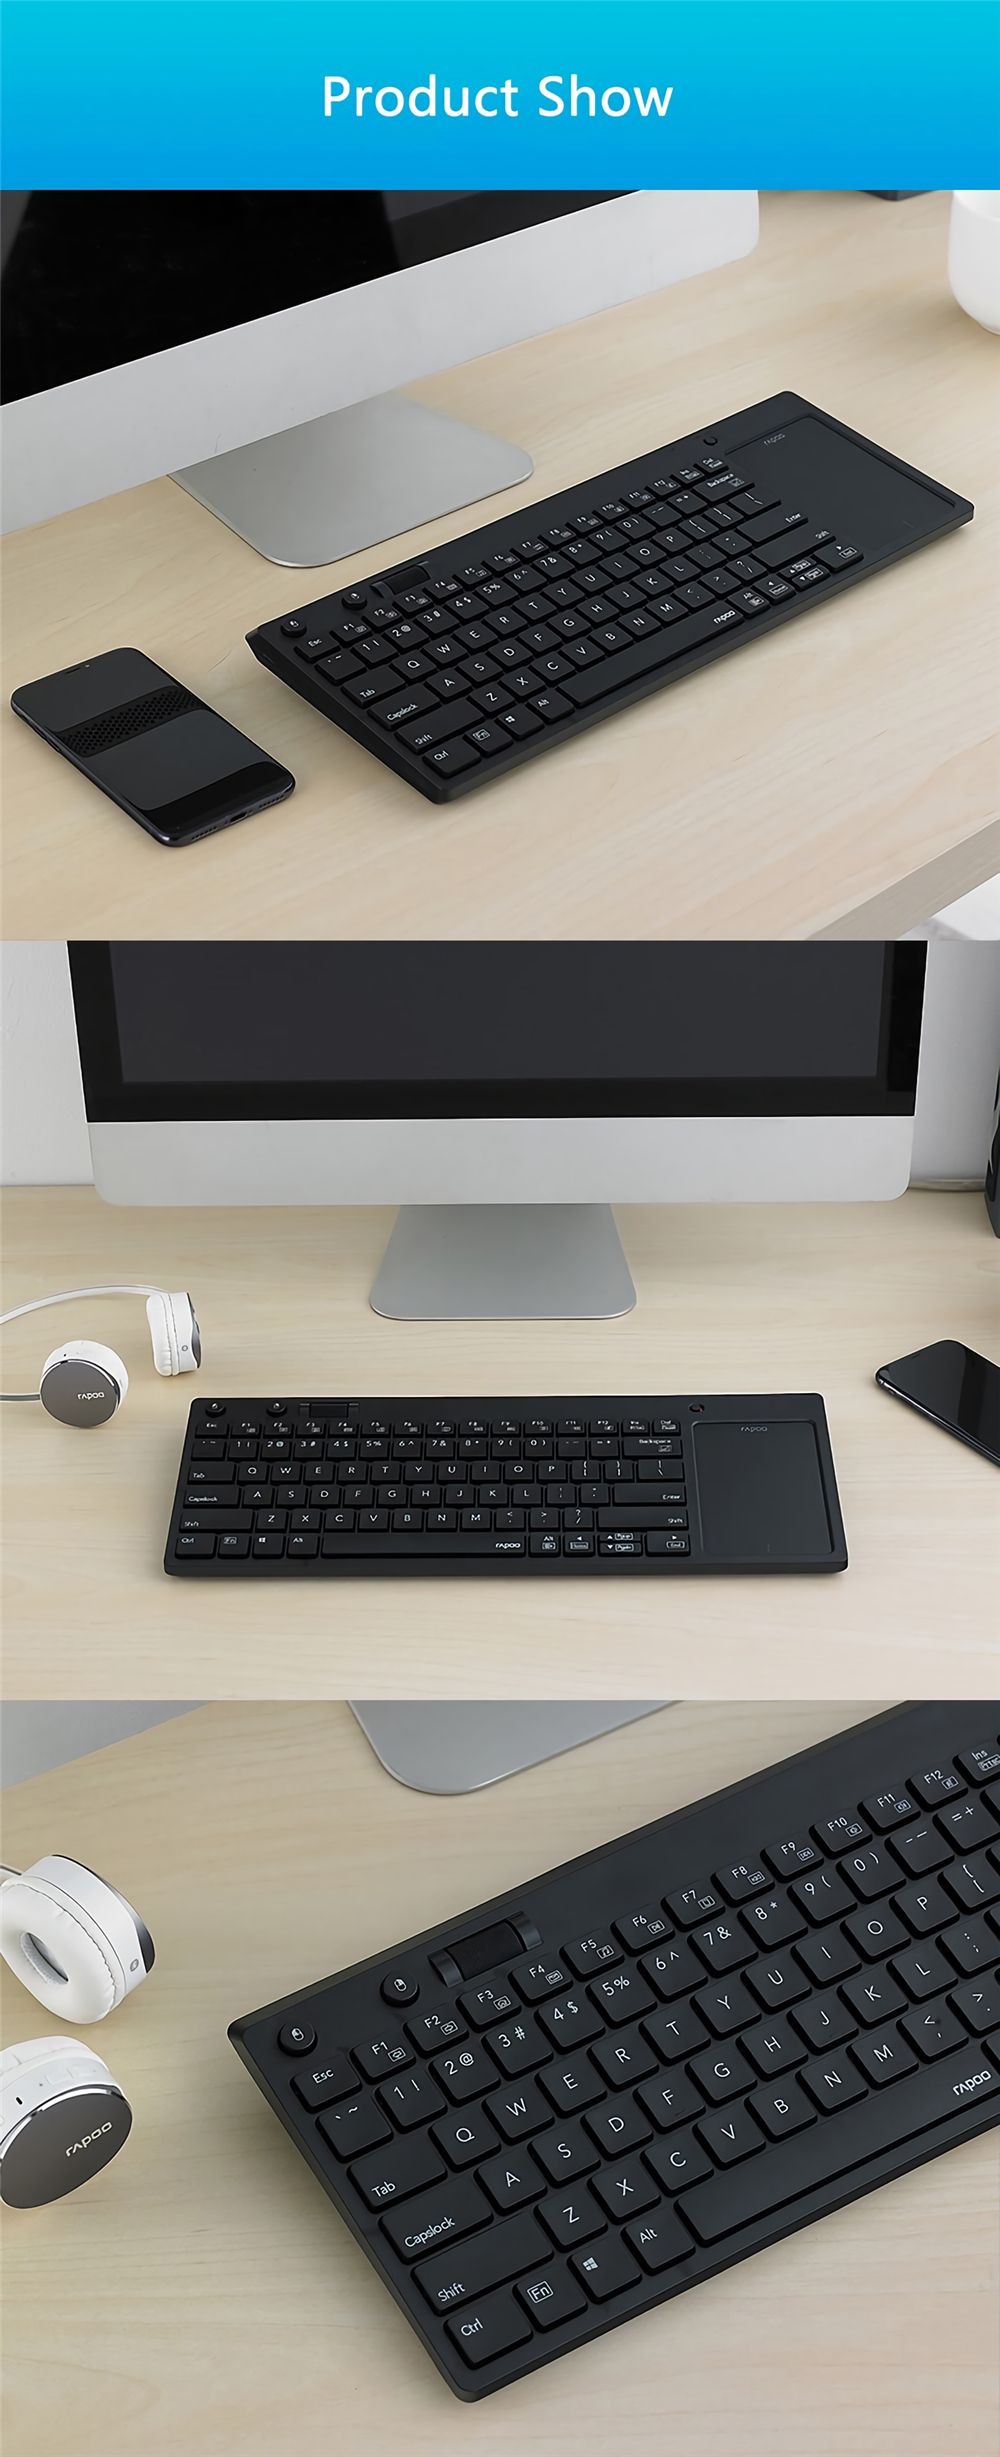 Rapoo-K2800-24G-Wireless-Touch-Keyboard-78-Keys-Integrated-Touchpad-Home-Office-Business-Keyboard-1761348